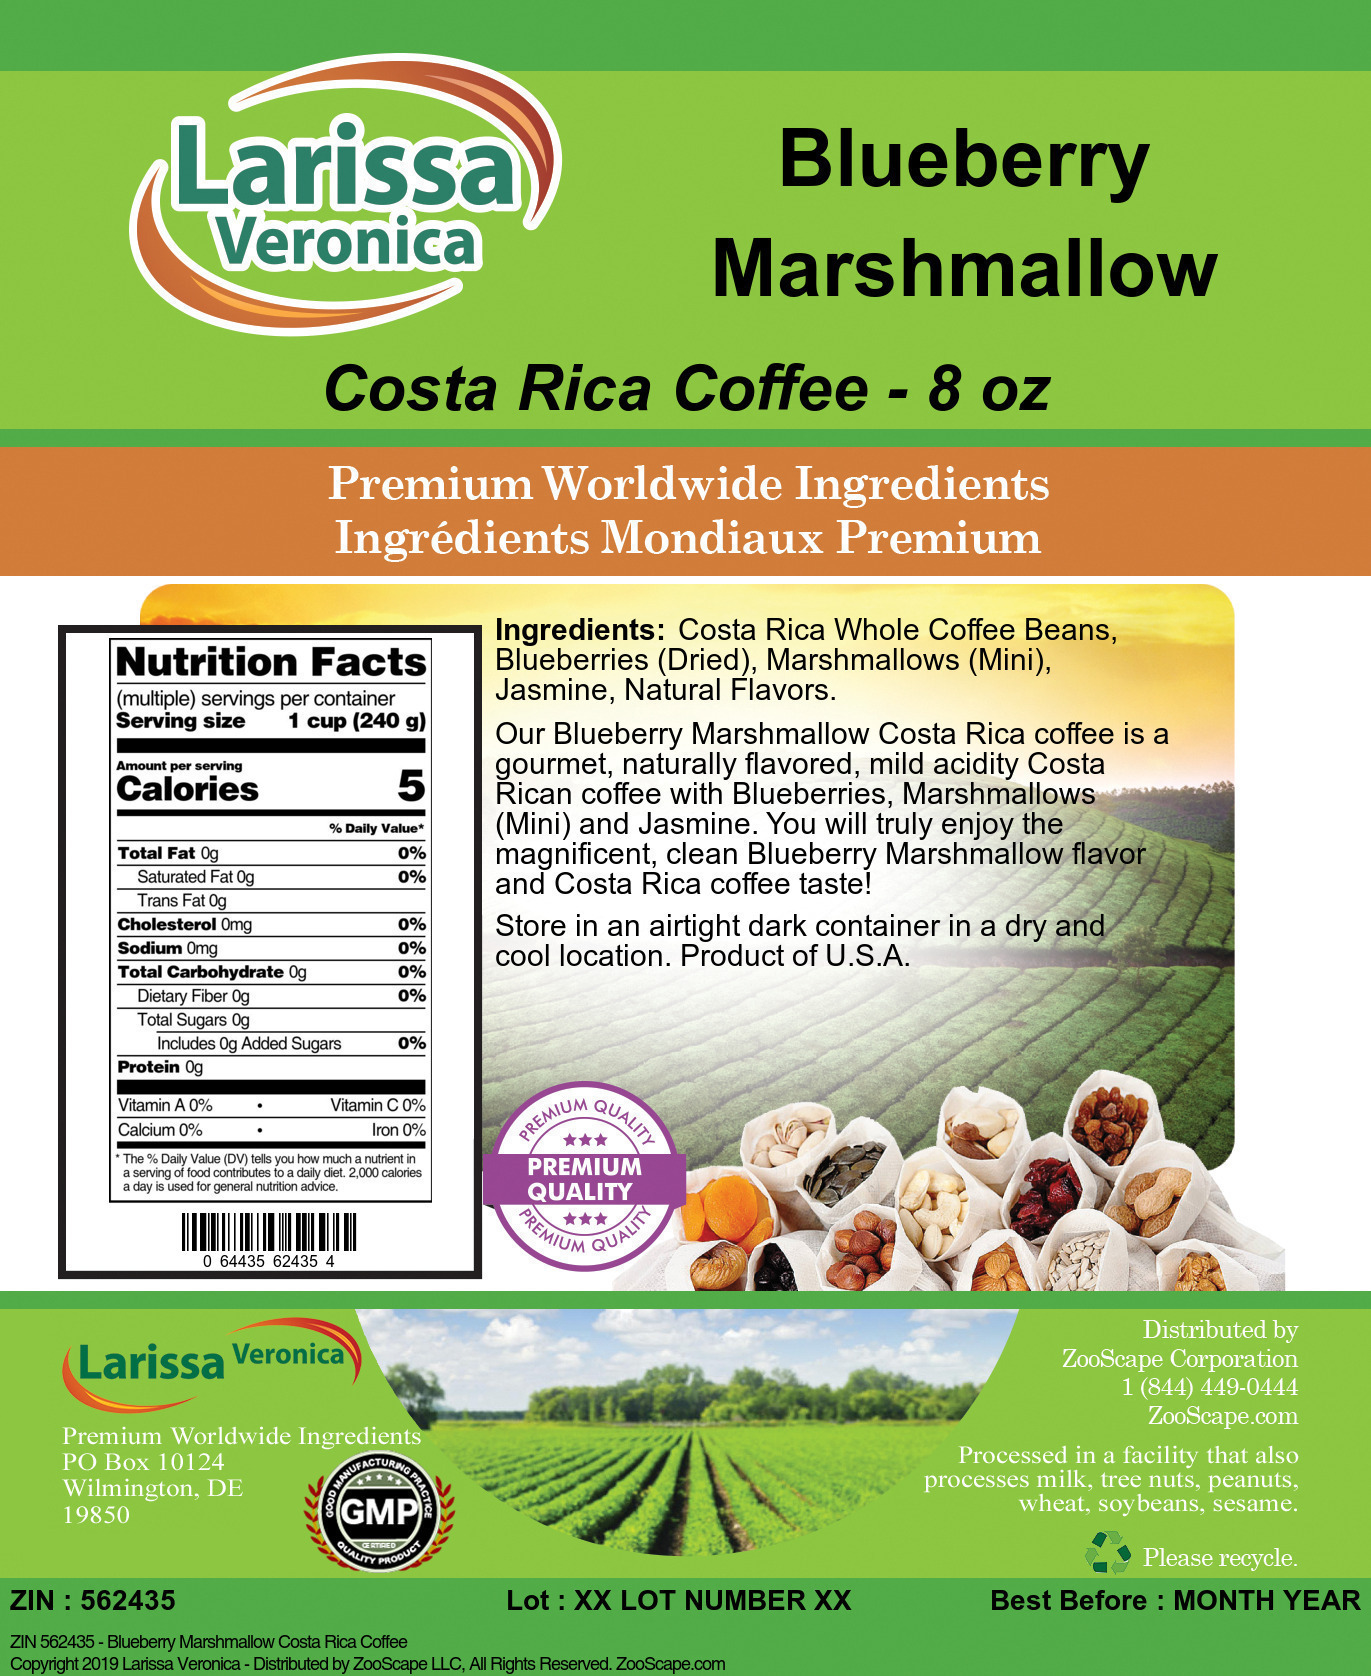 Blueberry Marshmallow Costa Rica Coffee - Label